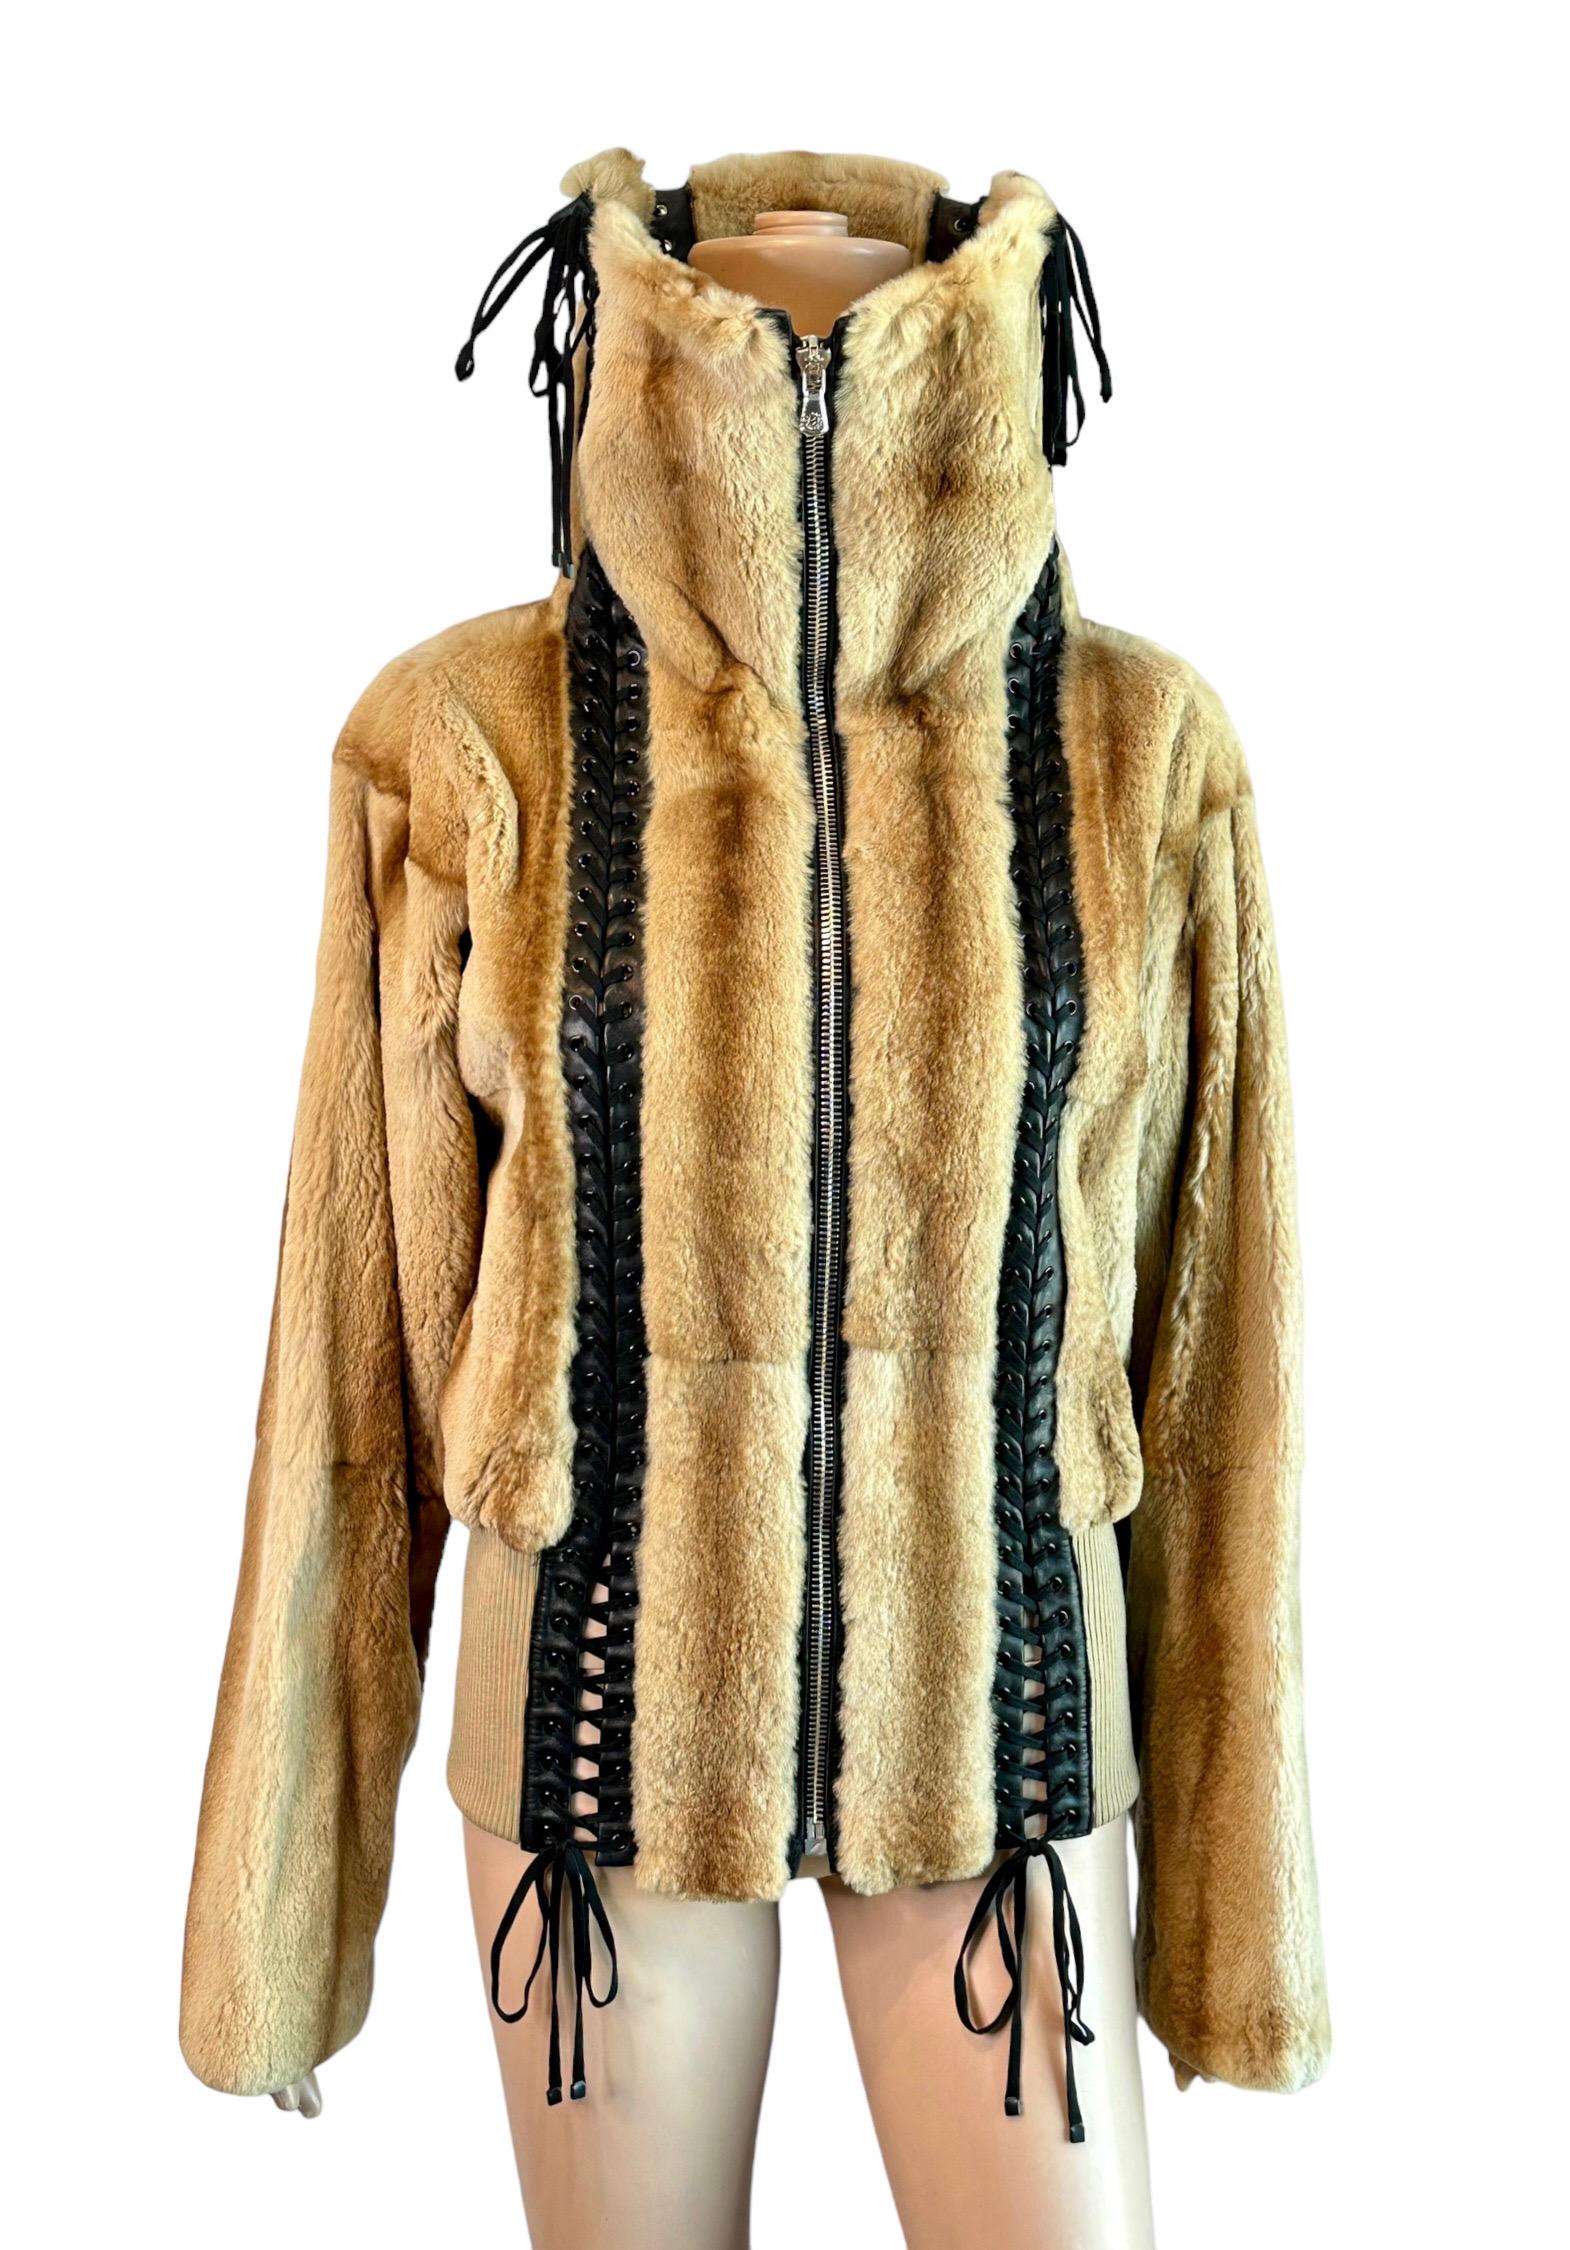 Dolce & Gabbana S/S 2003 Bondage Lace Up Weasel Fur Jacket Coat For Sale 6